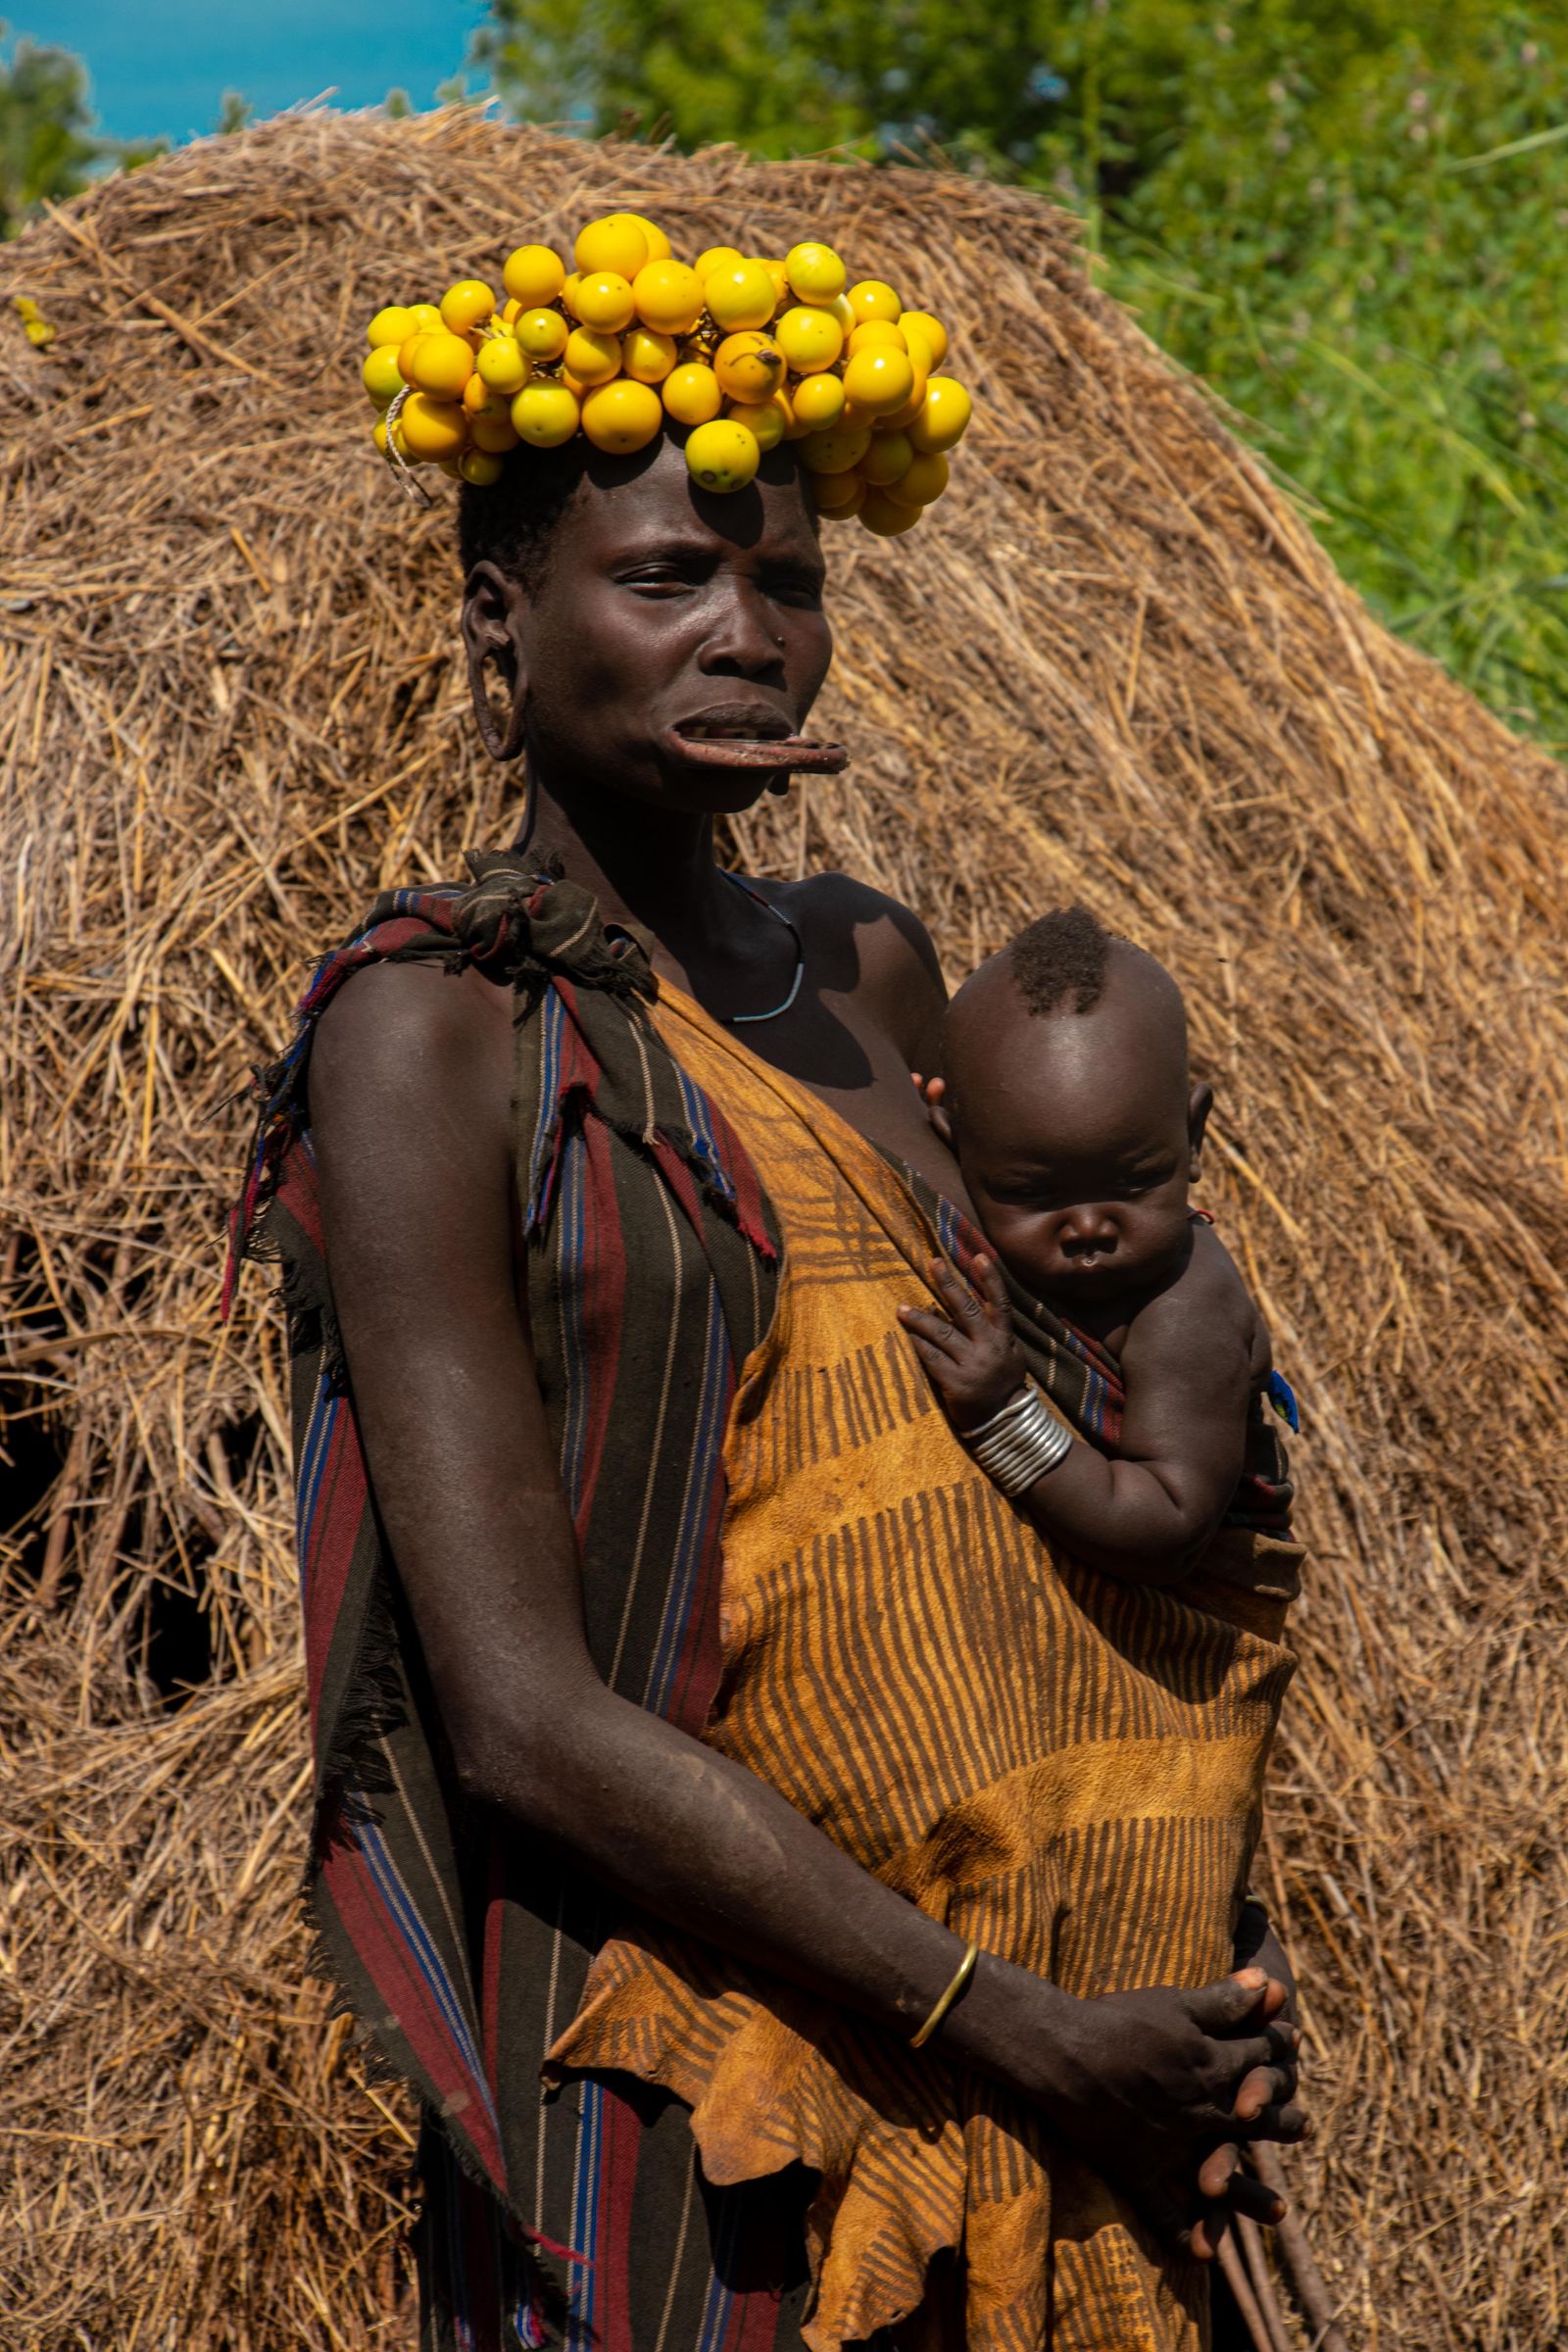 © Nwando Ebeledike - Mother and child in Mursi Tribe, Omo Valley, Ethiopia